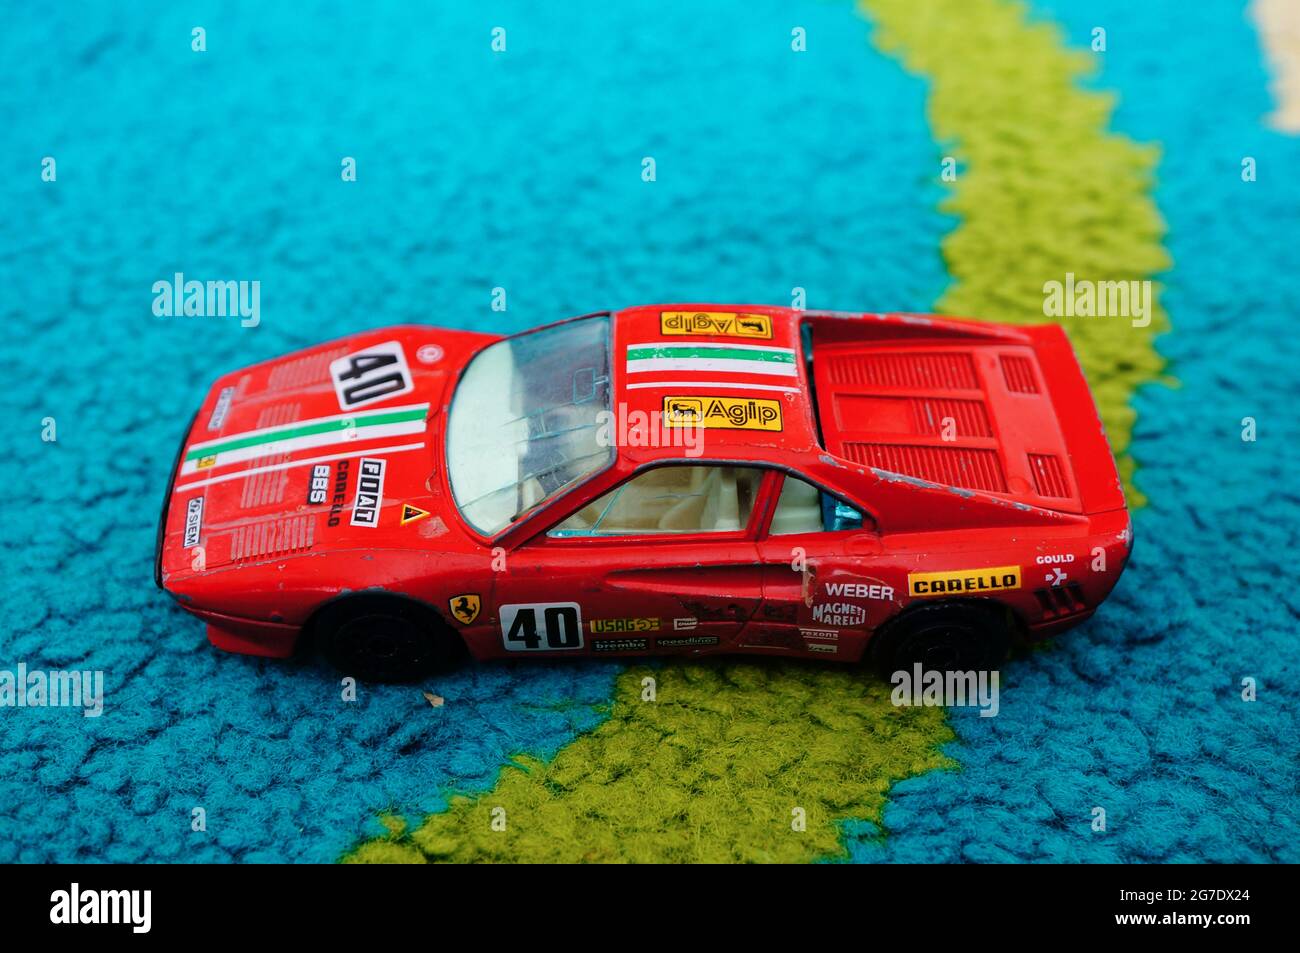 POZNAN, POLAND - Sep 10, 2018: A red Bburago toy model Ferrari GTO sports car Stock Photo